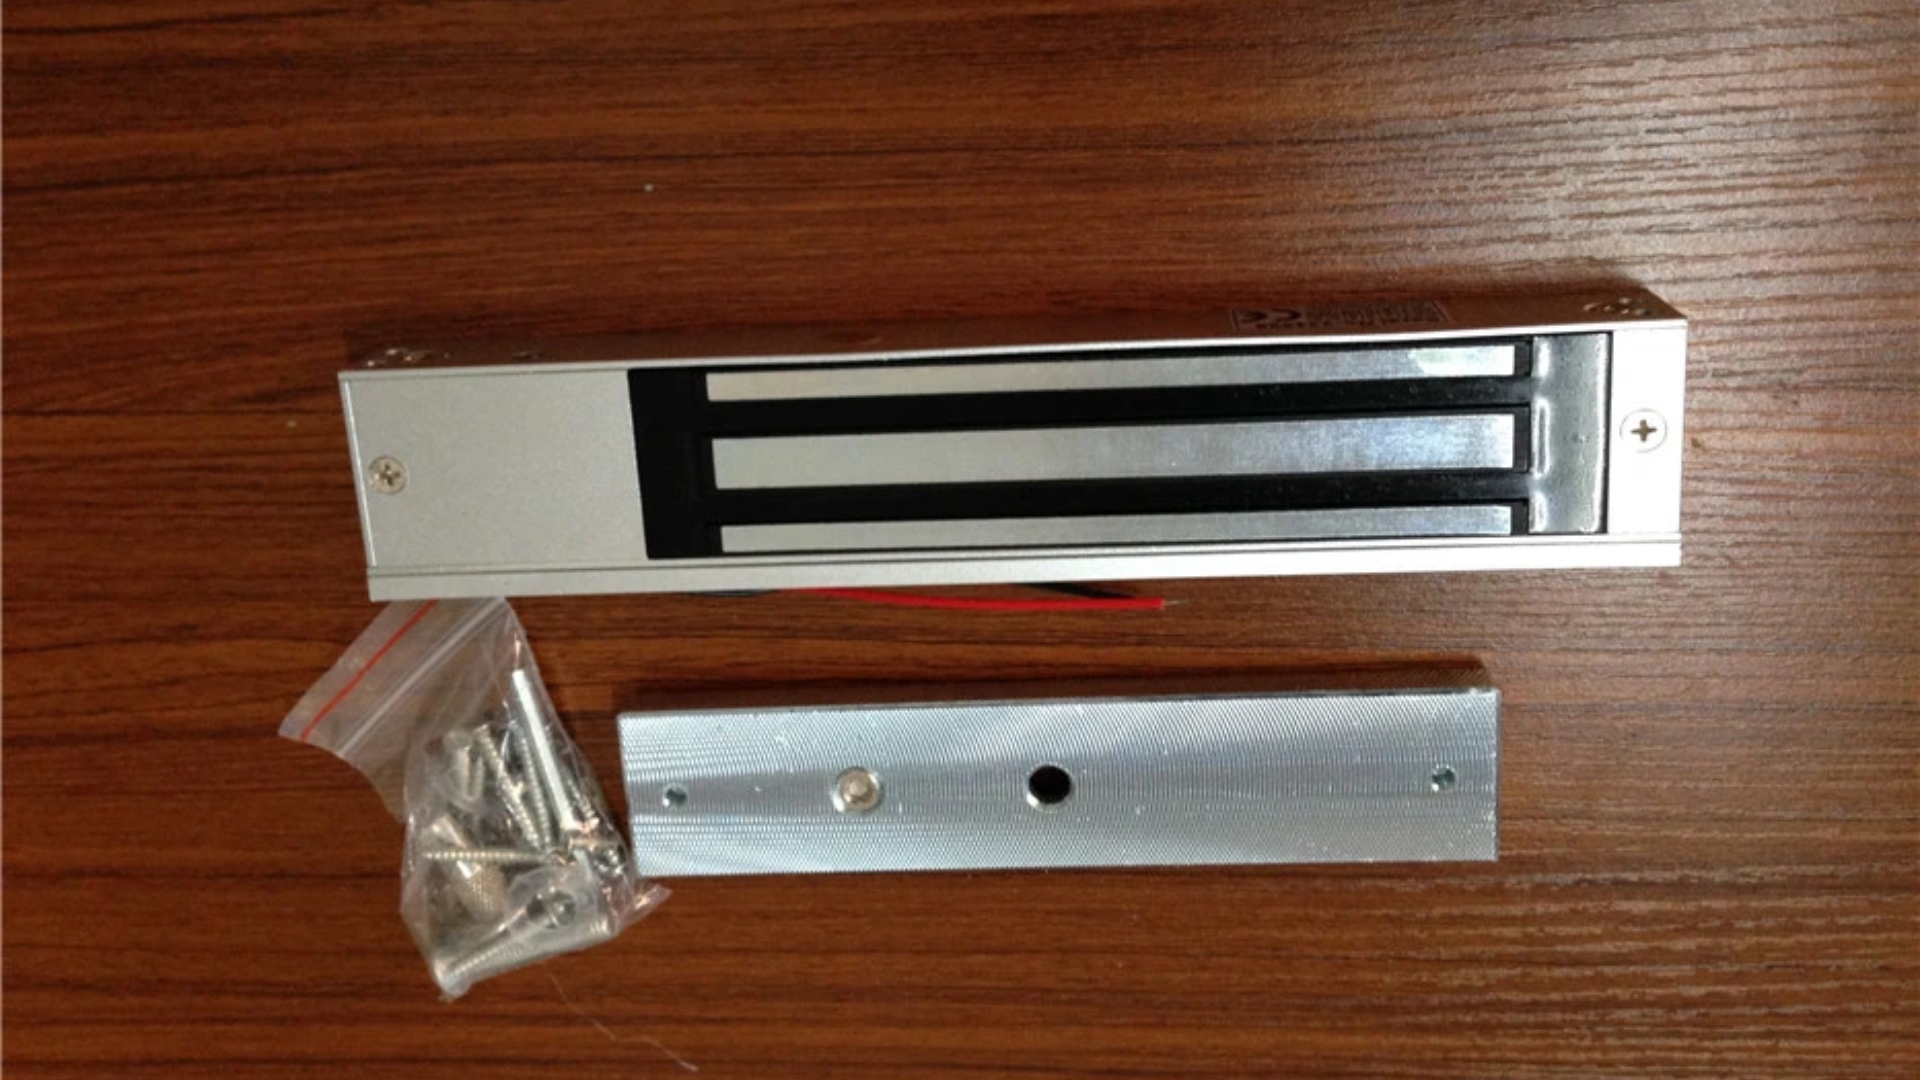 A magnetic lock kit